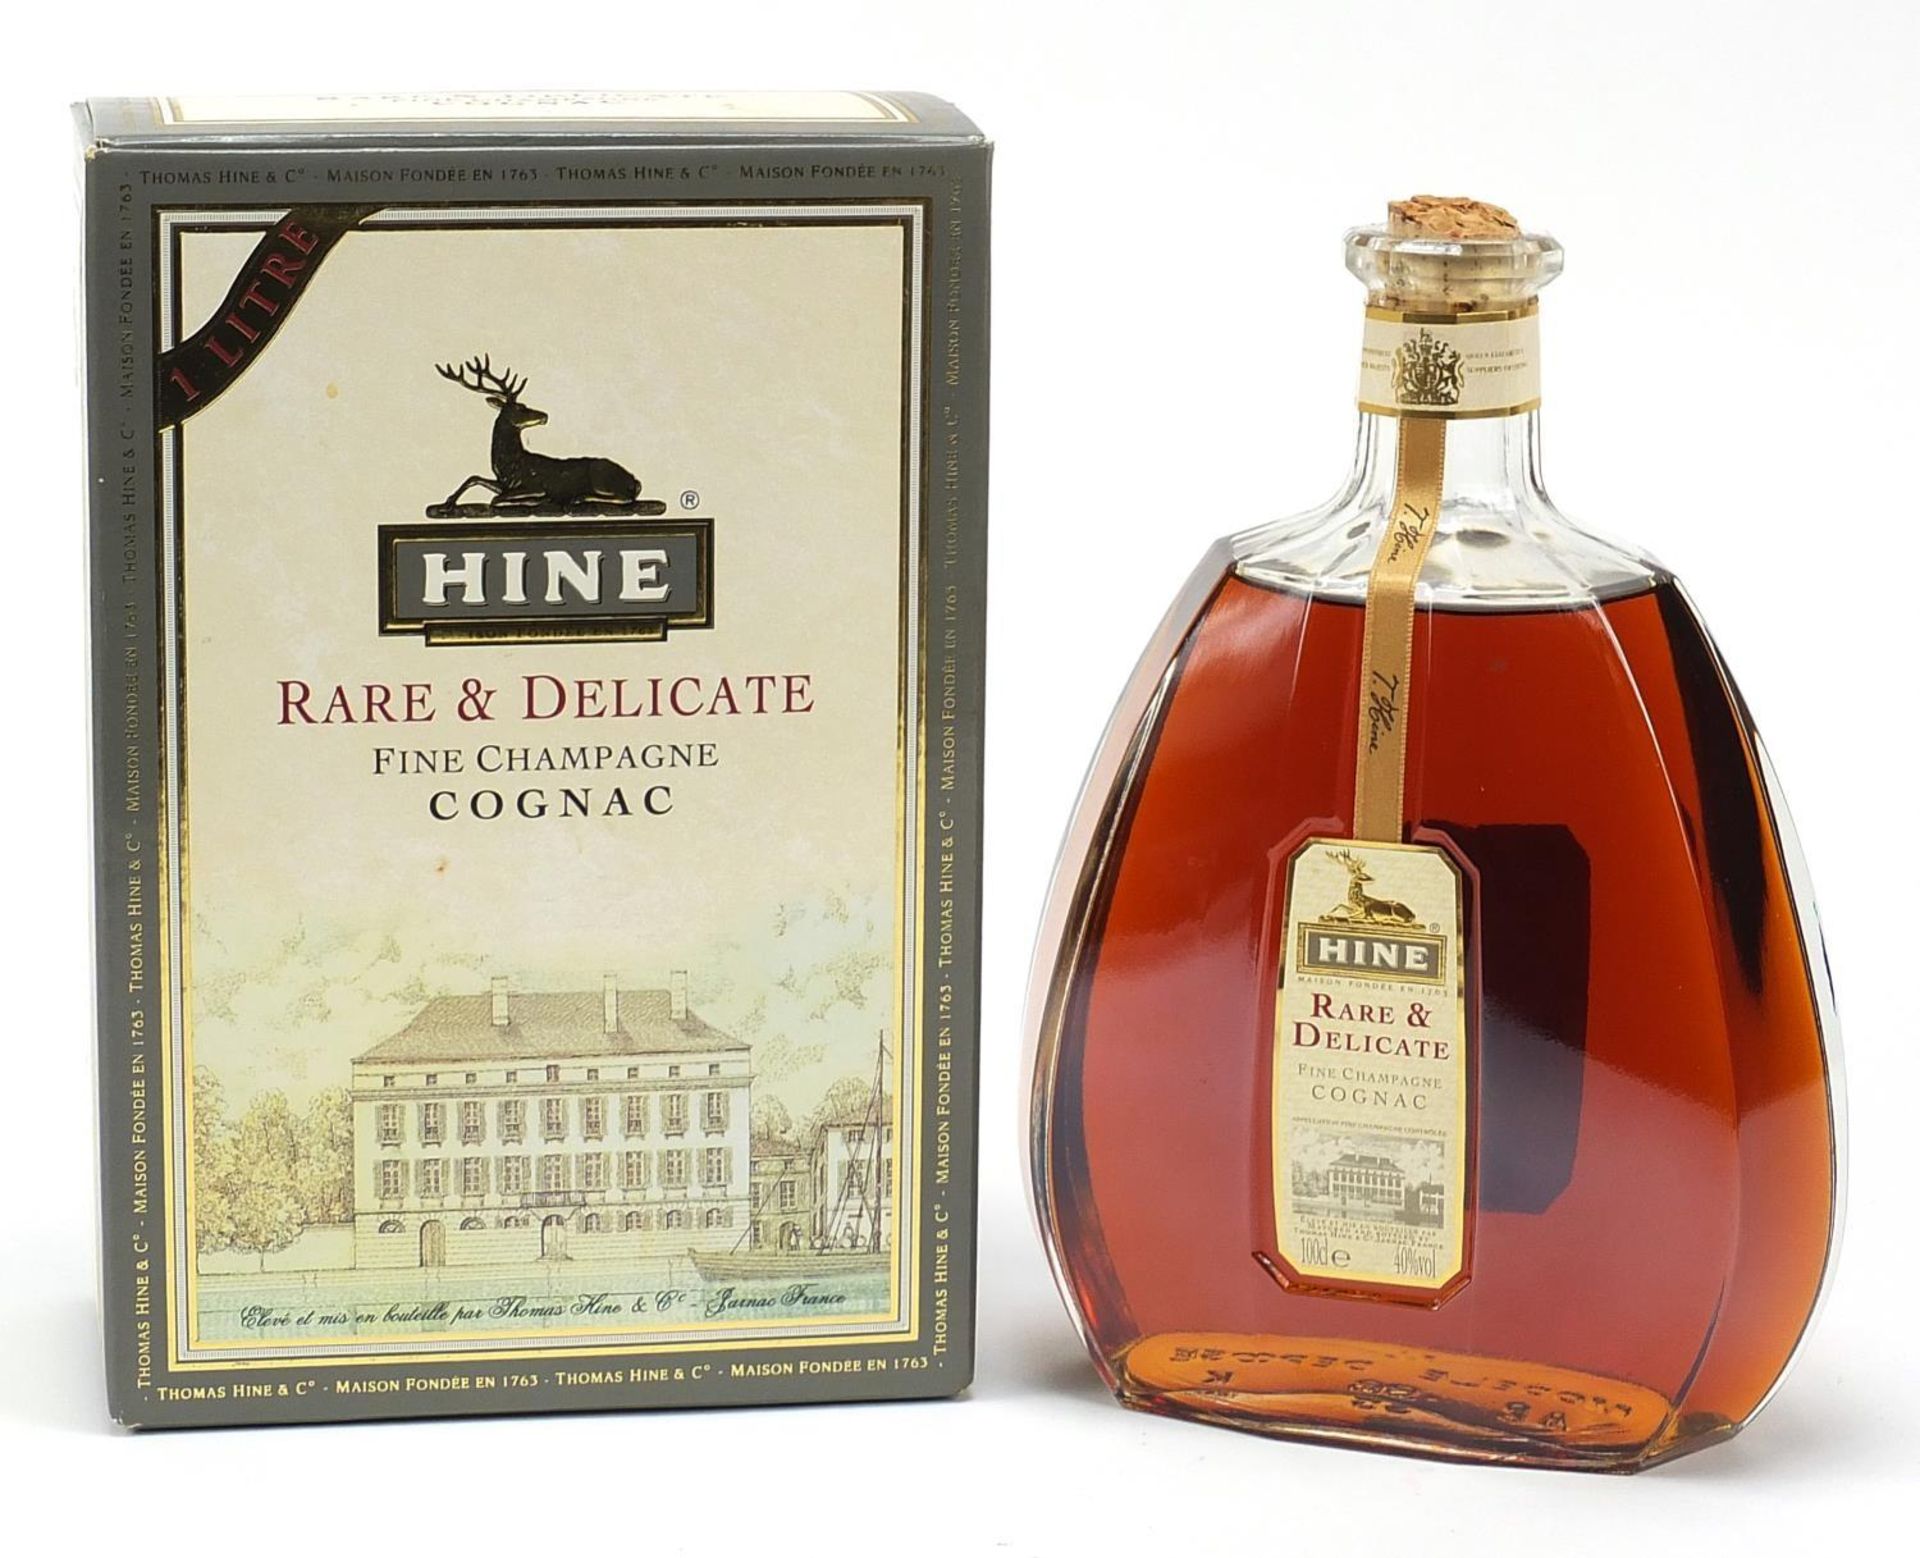 Bottle of Hine Rare & Delicate Fine Champagne Cognac with box